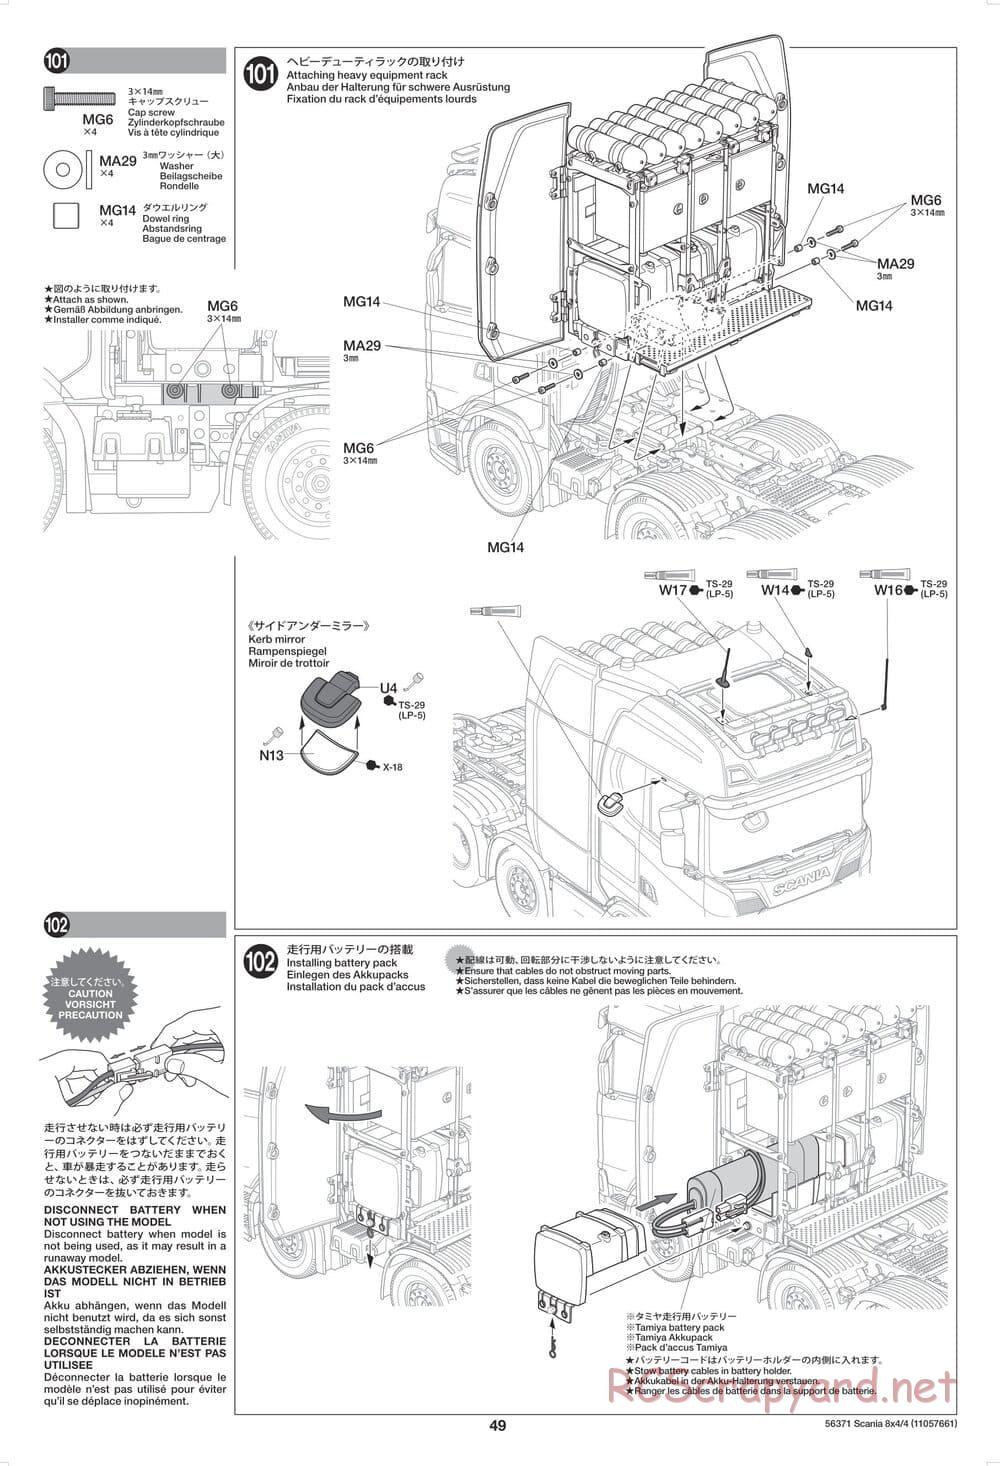 Tamiya - Scania 770 S 8x4/4 Chassis - Manual - Page 49